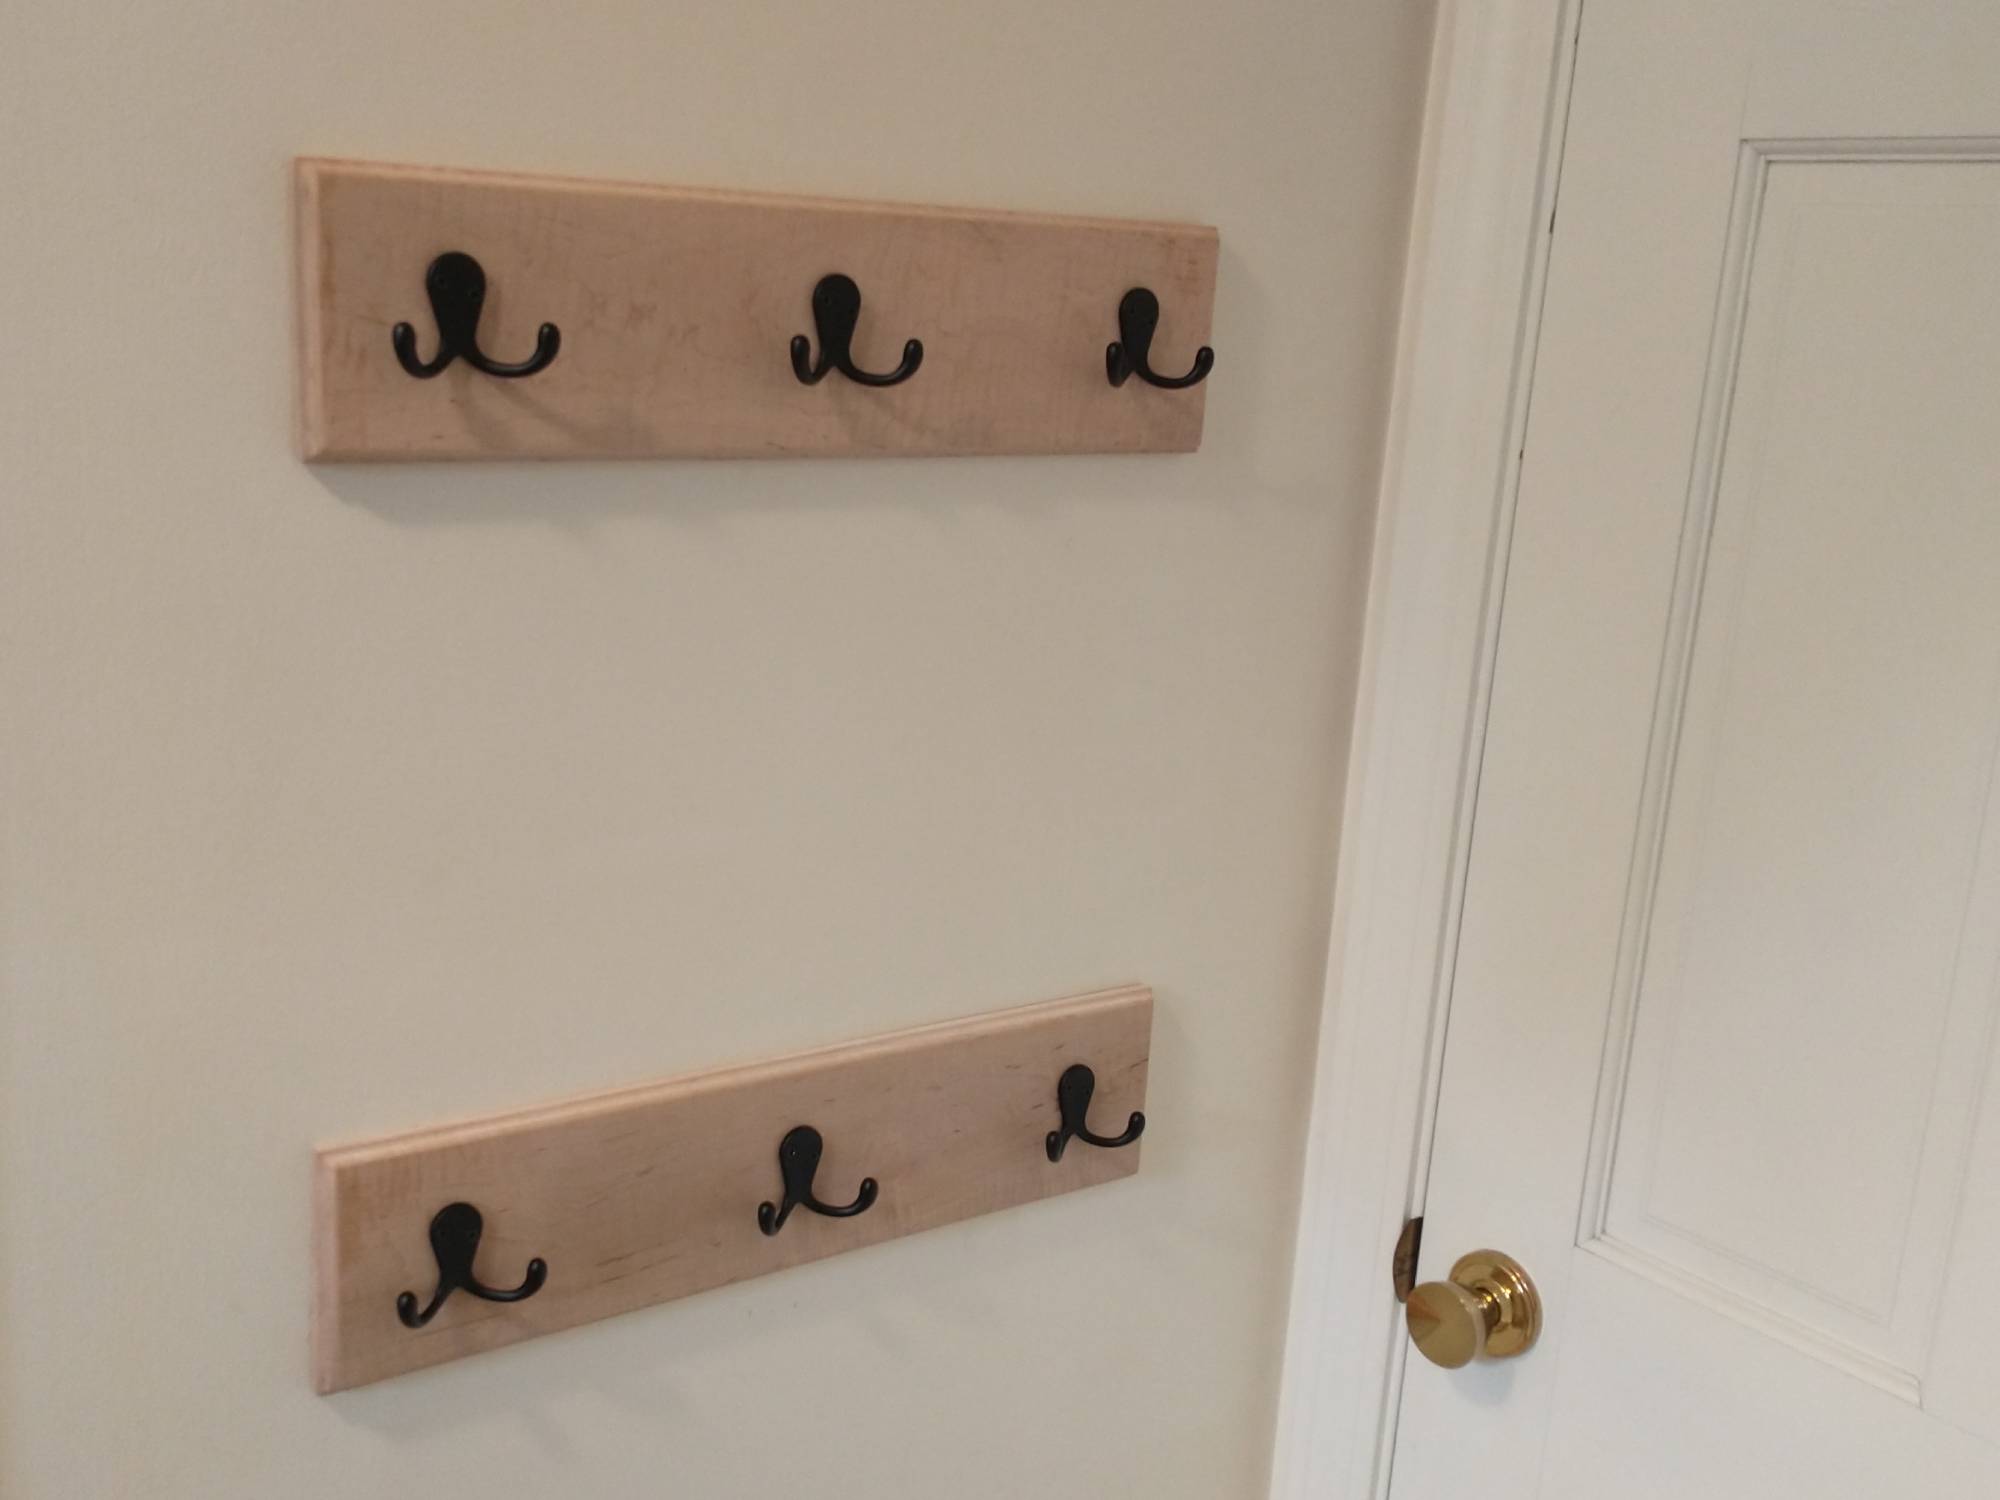 How to build custom wall-mounted coat hooks